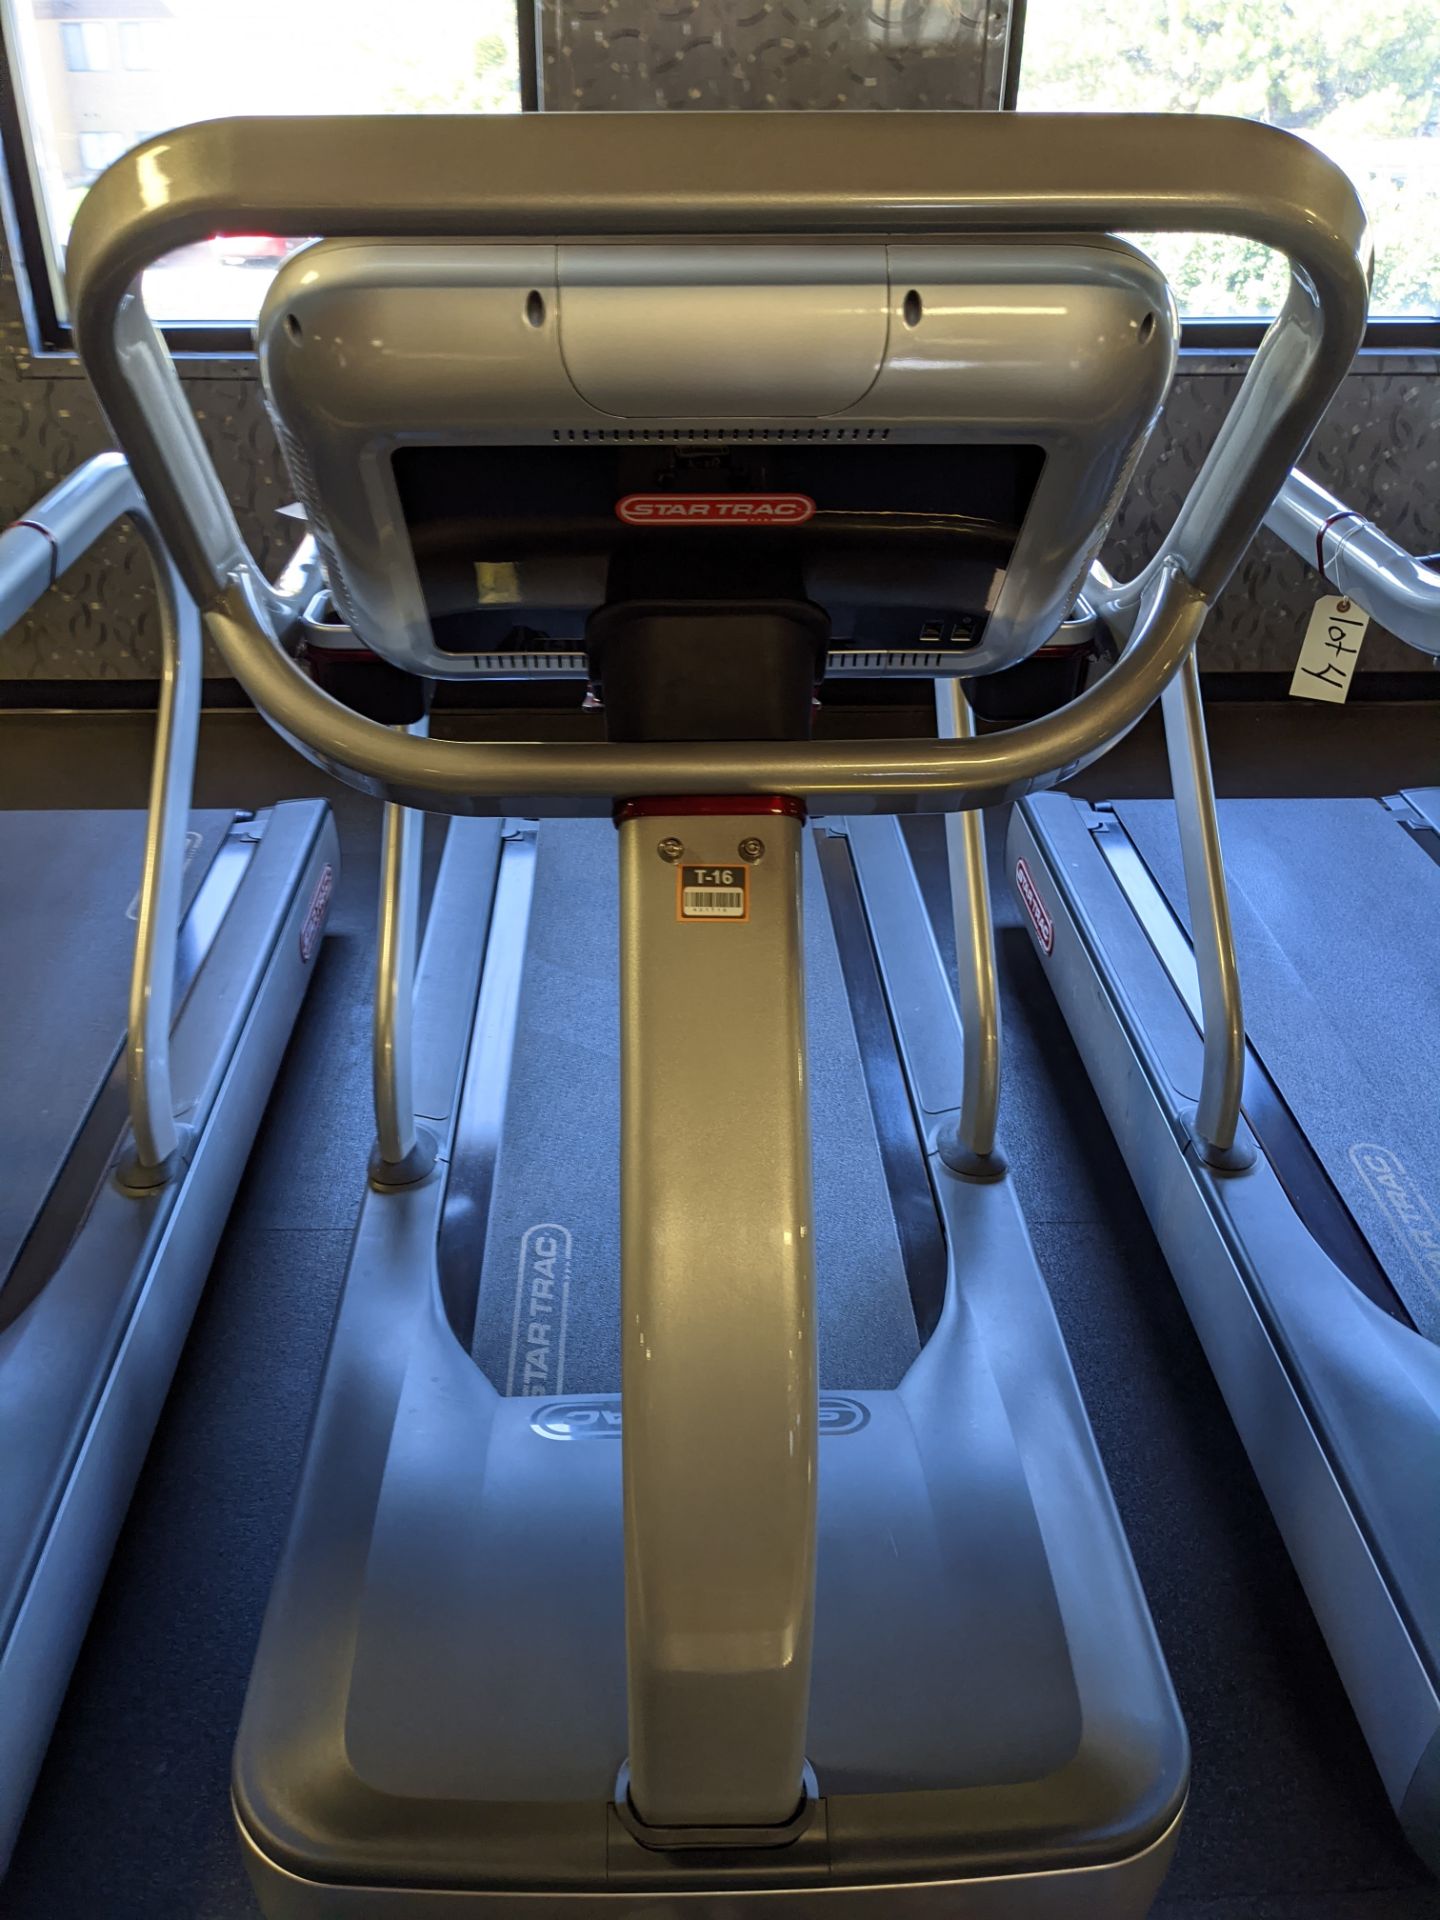 Star Trac Treadmill - Image 2 of 3